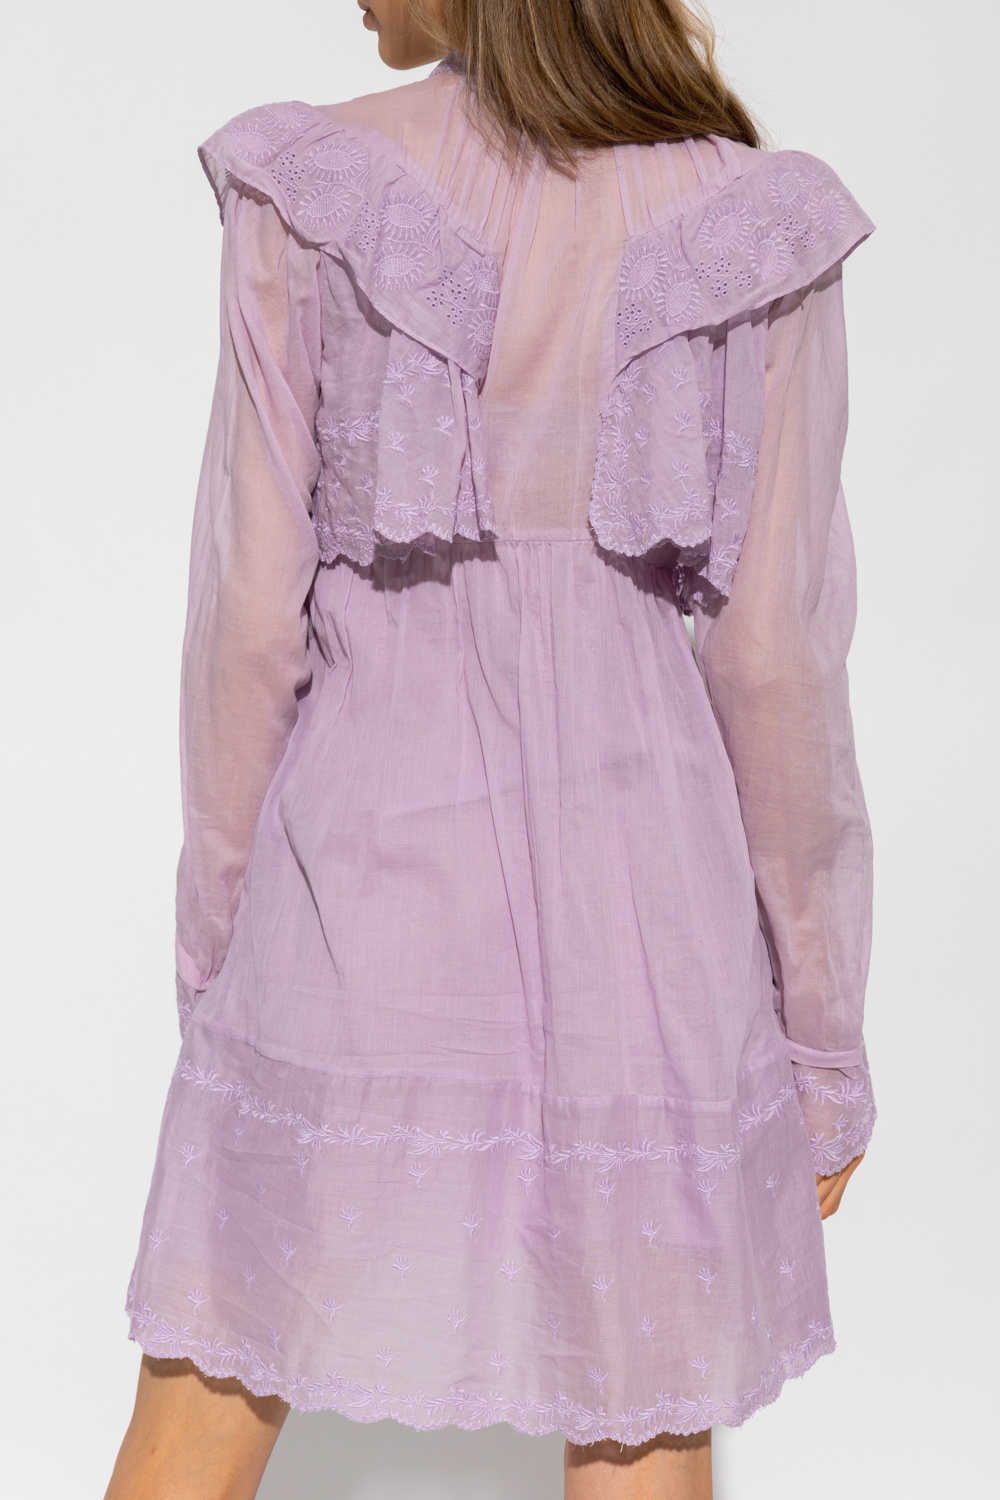 elisabetta franchi fringe skirt lace mini dress item ‘Limpeza’ dress